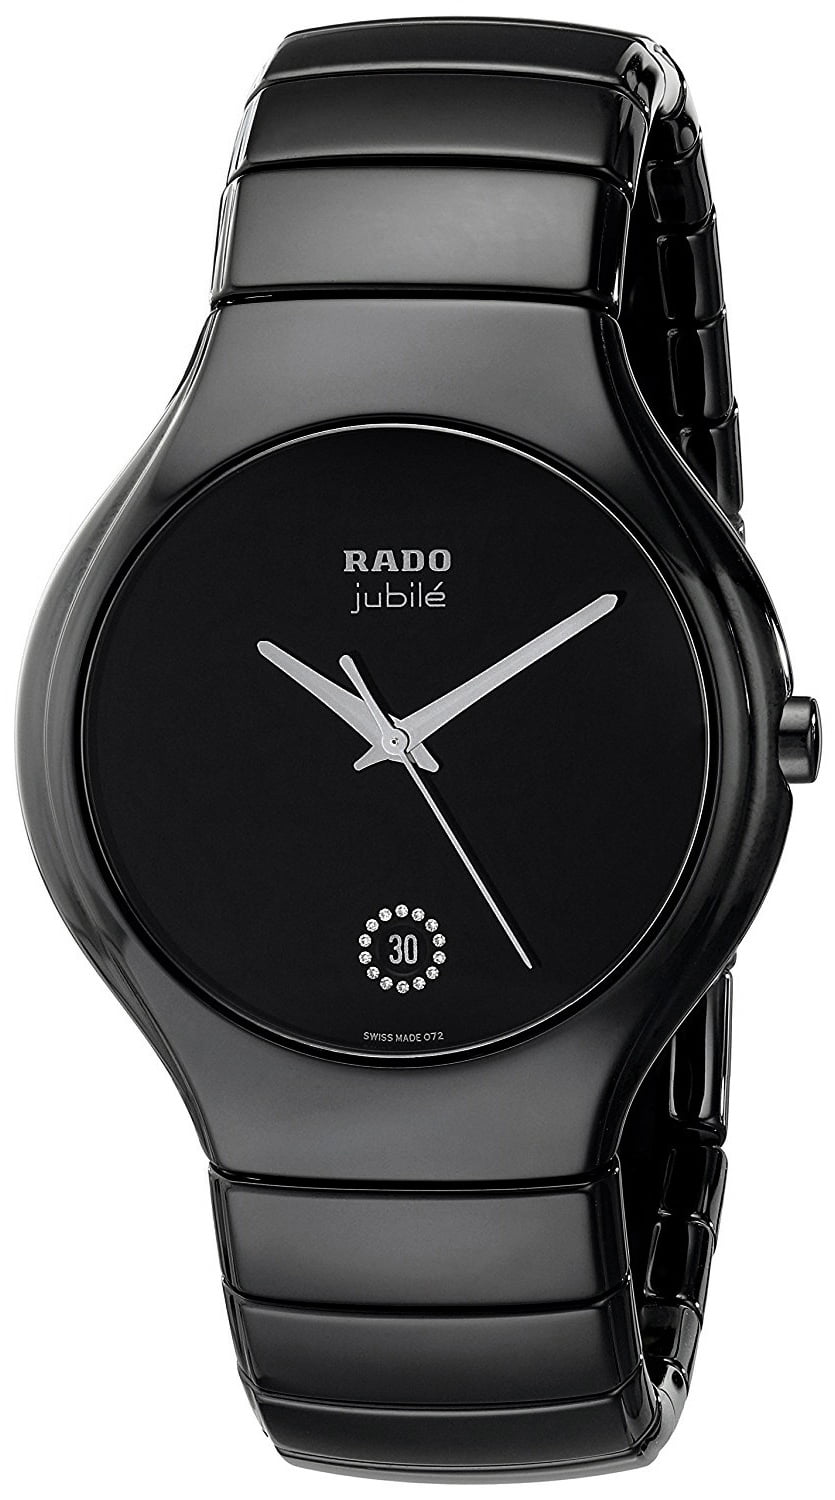 Мужские часы радо оригинал цены. Rado Jubile Swiss 8020g. Rado Jubile Swiss r2233. Часы Rado r20199722. Rado часы r27235206.